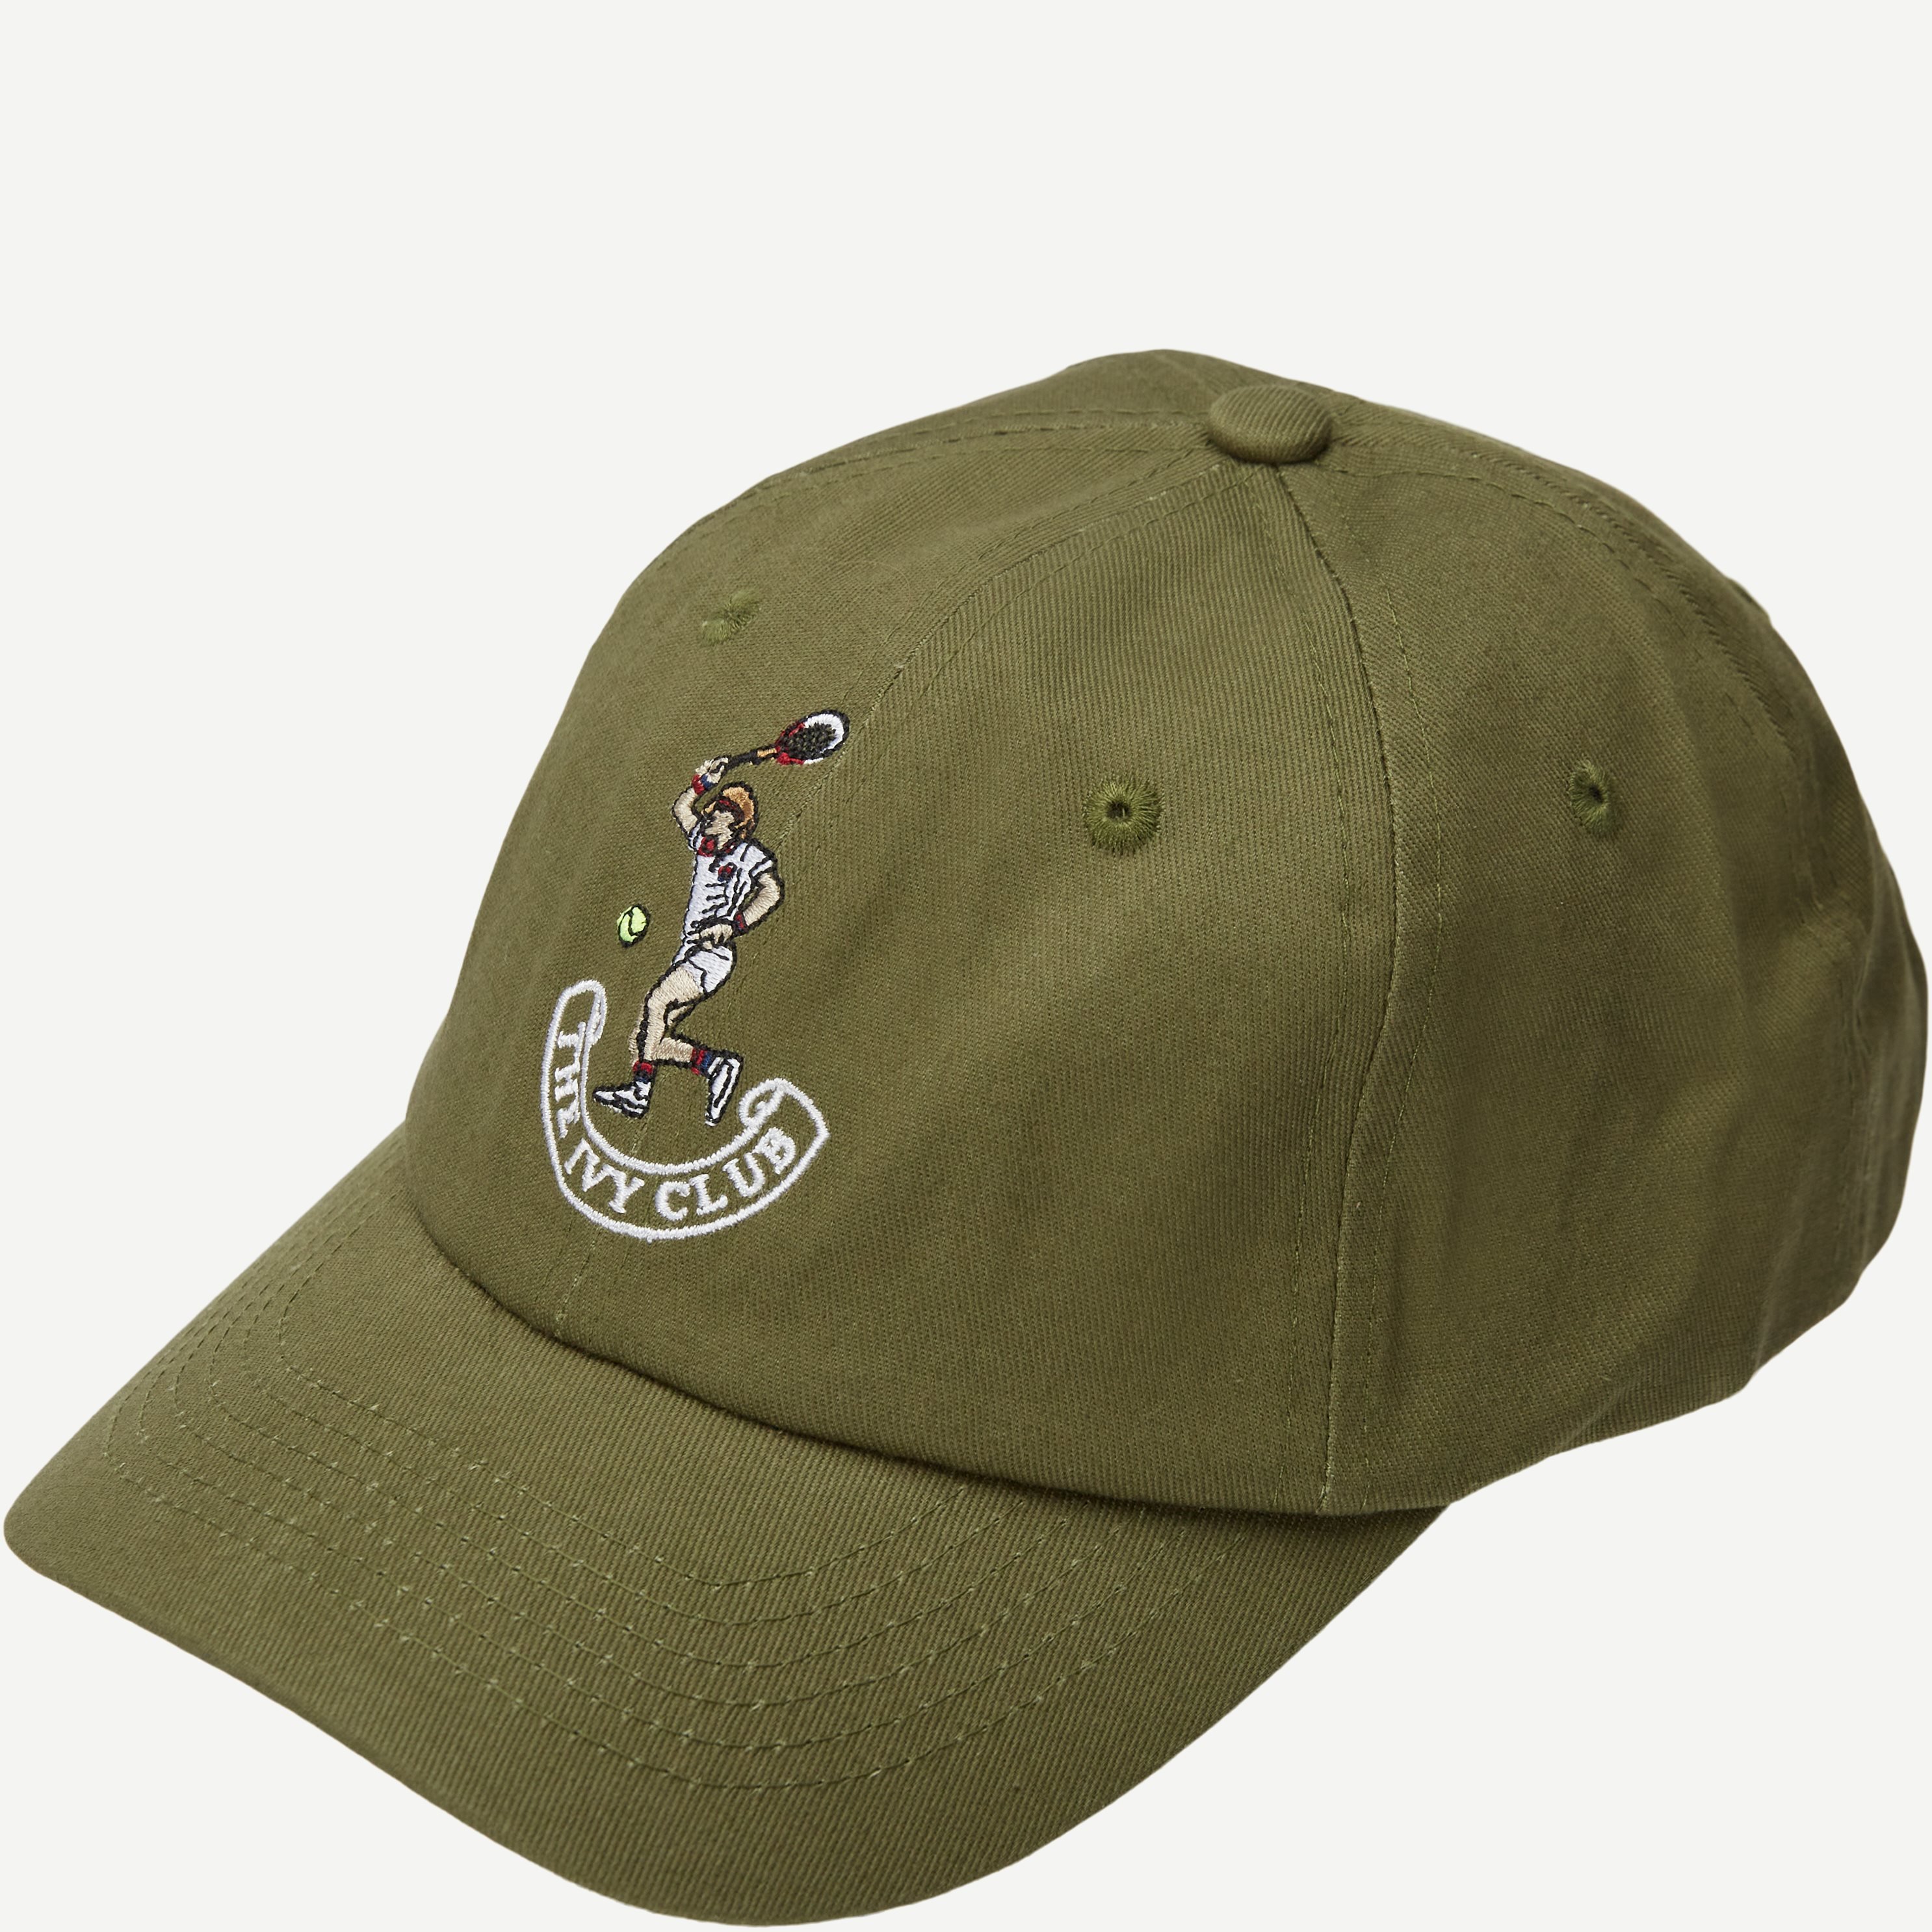 Tennis Player Cap - Caps - Army